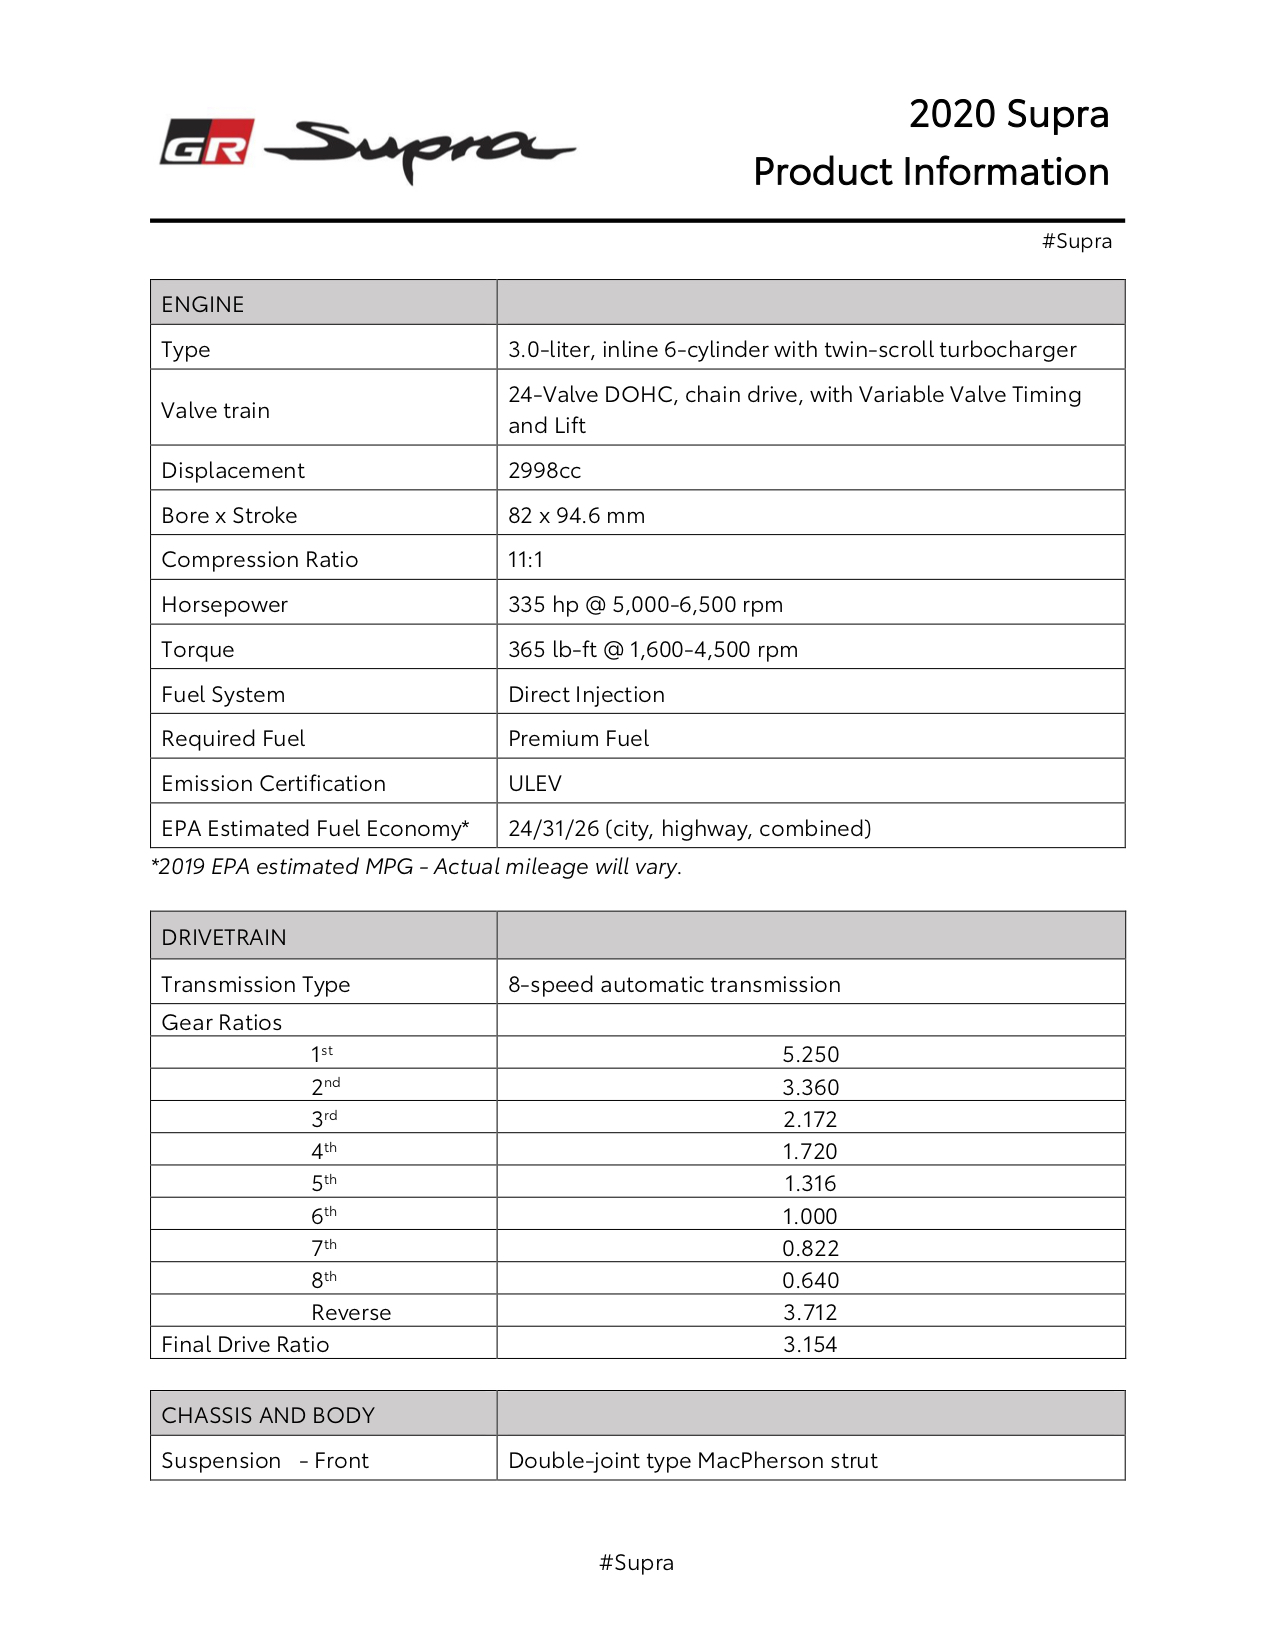 2020 Toyota Supra Product Info 1.jpg